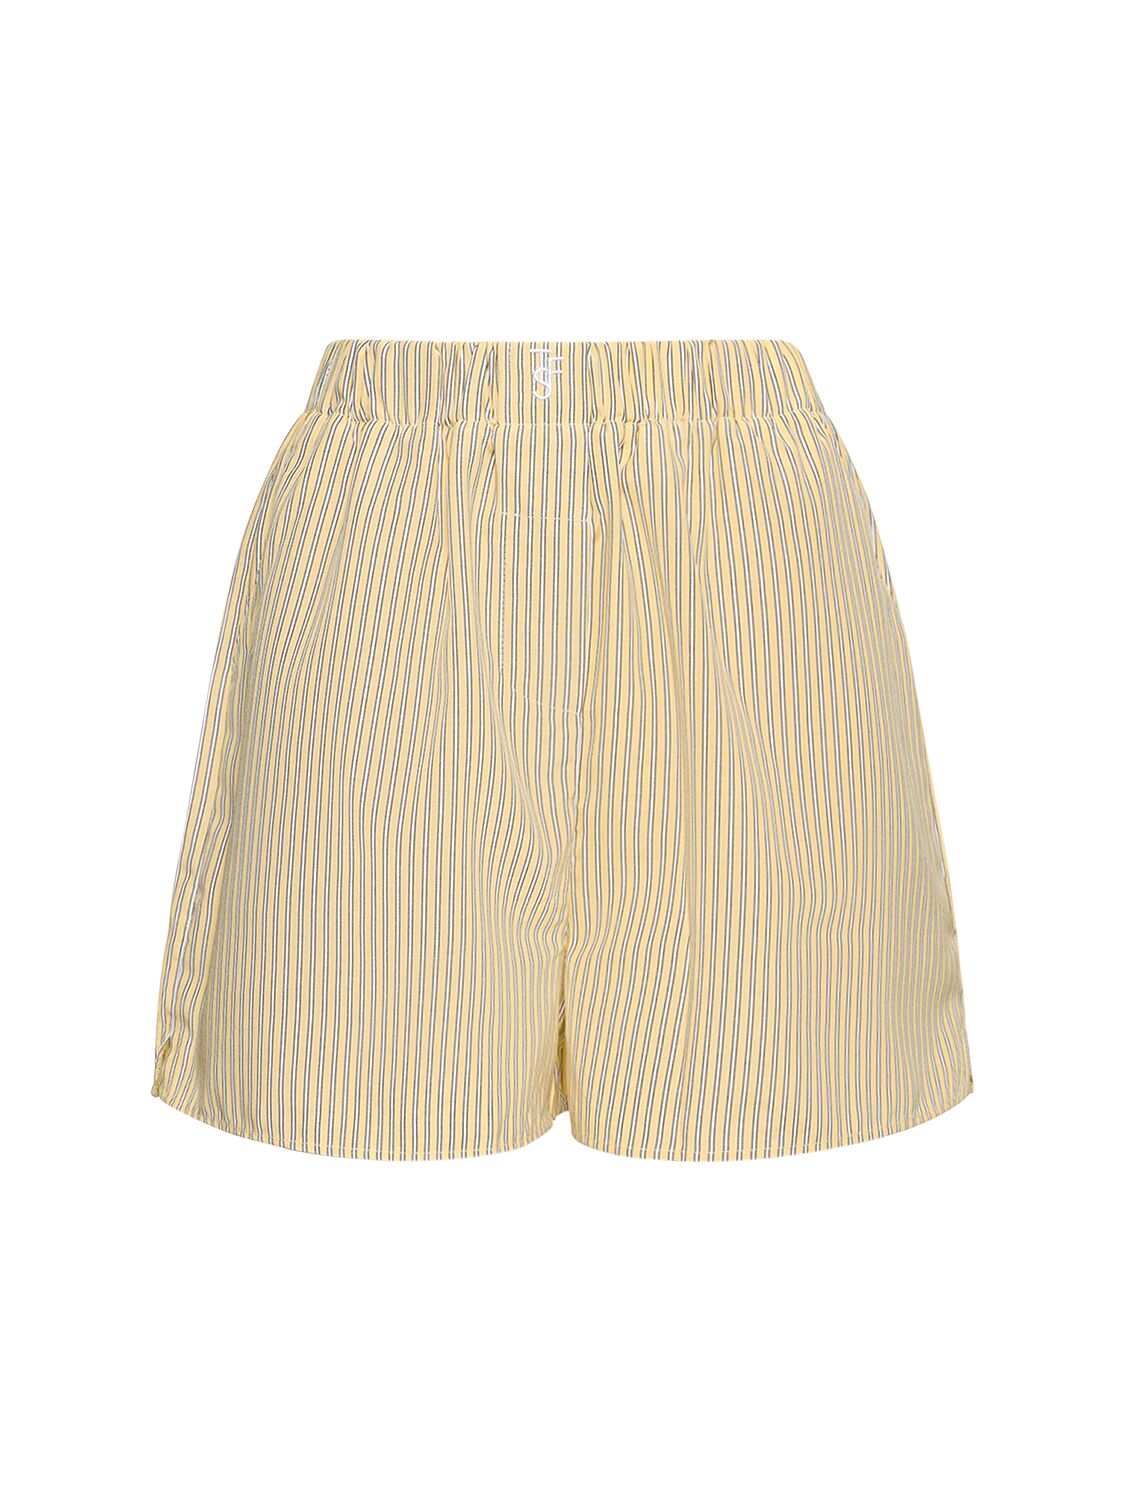 Image of Lui Cotton Blend Oxford Shorts